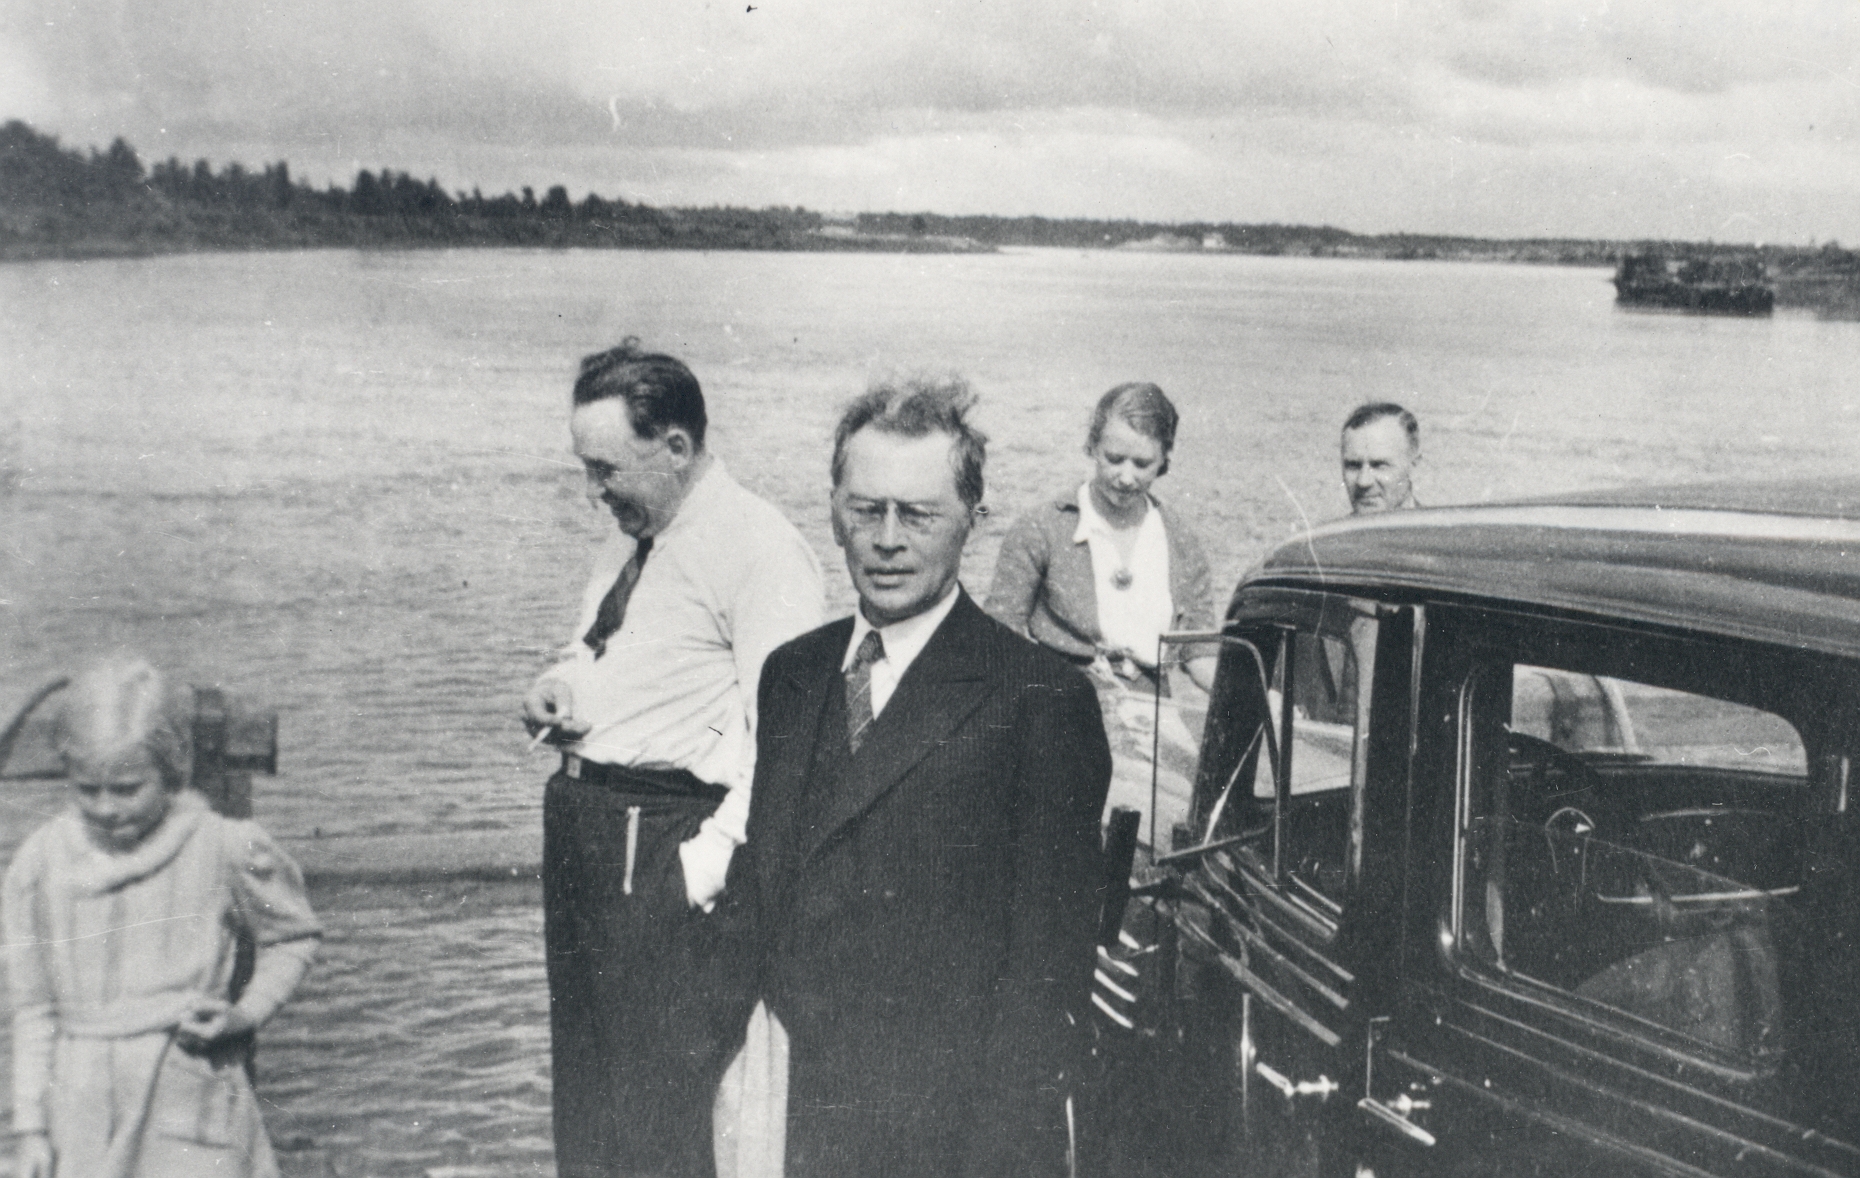 E. Eesorg, ?, f. Tuglas, e. Tuglas, p. Kurvits on Narva River, 1937